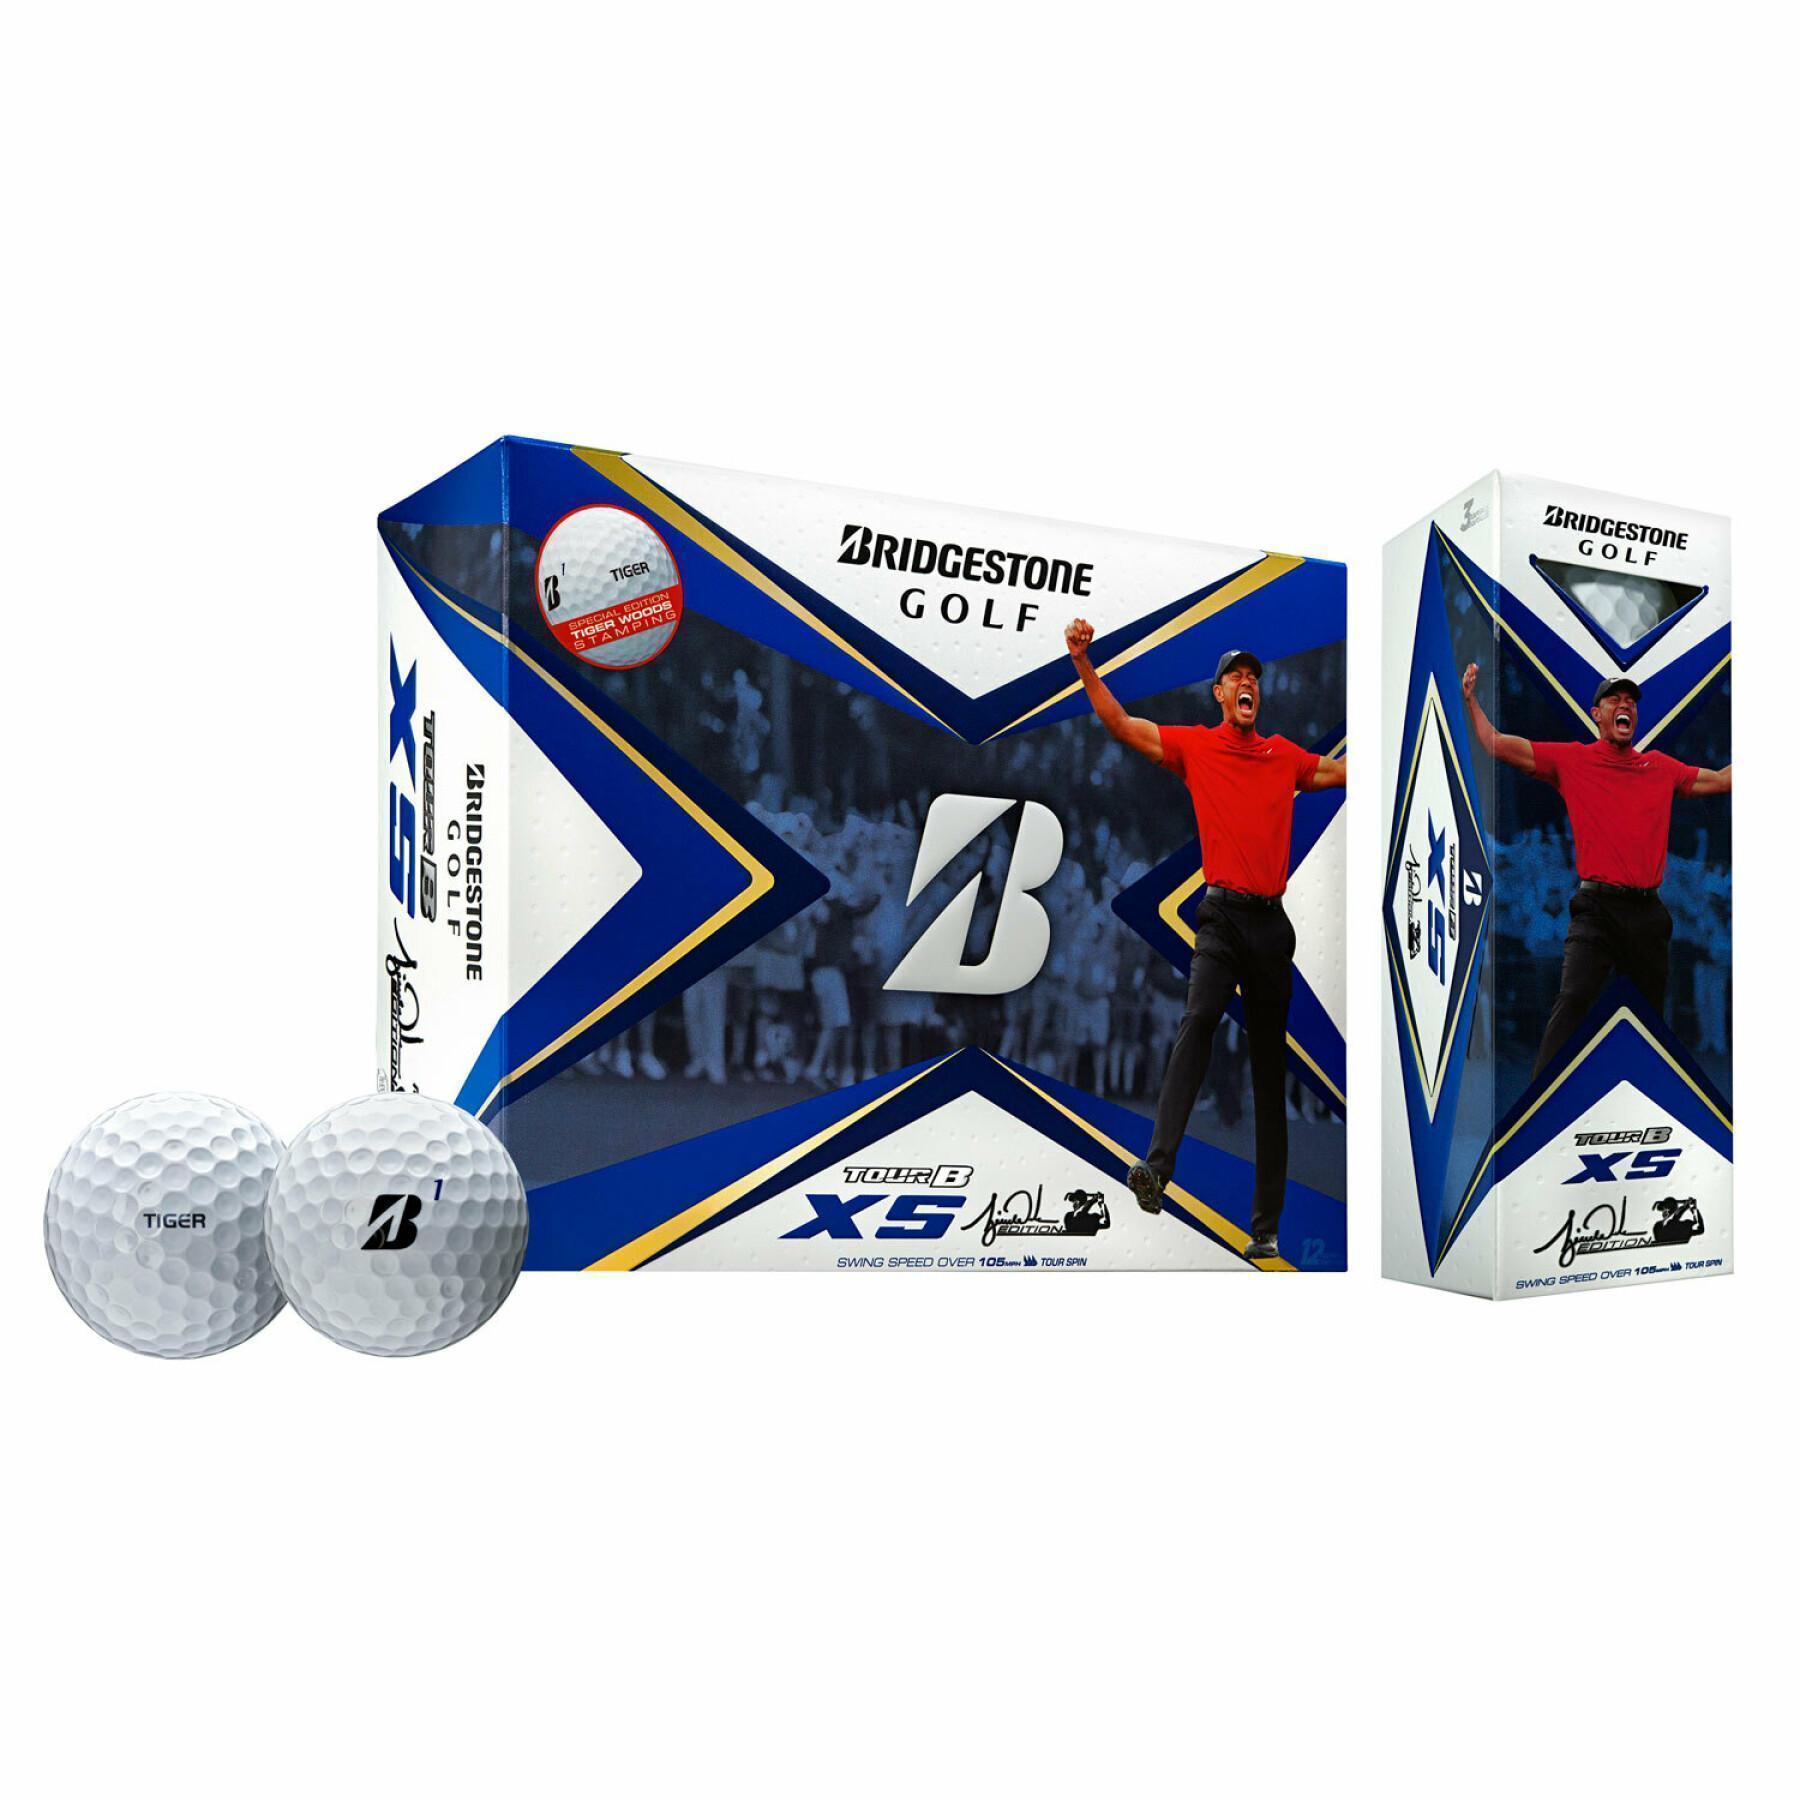 Golfballen Bridgestone Tour B XS Tiger Edition